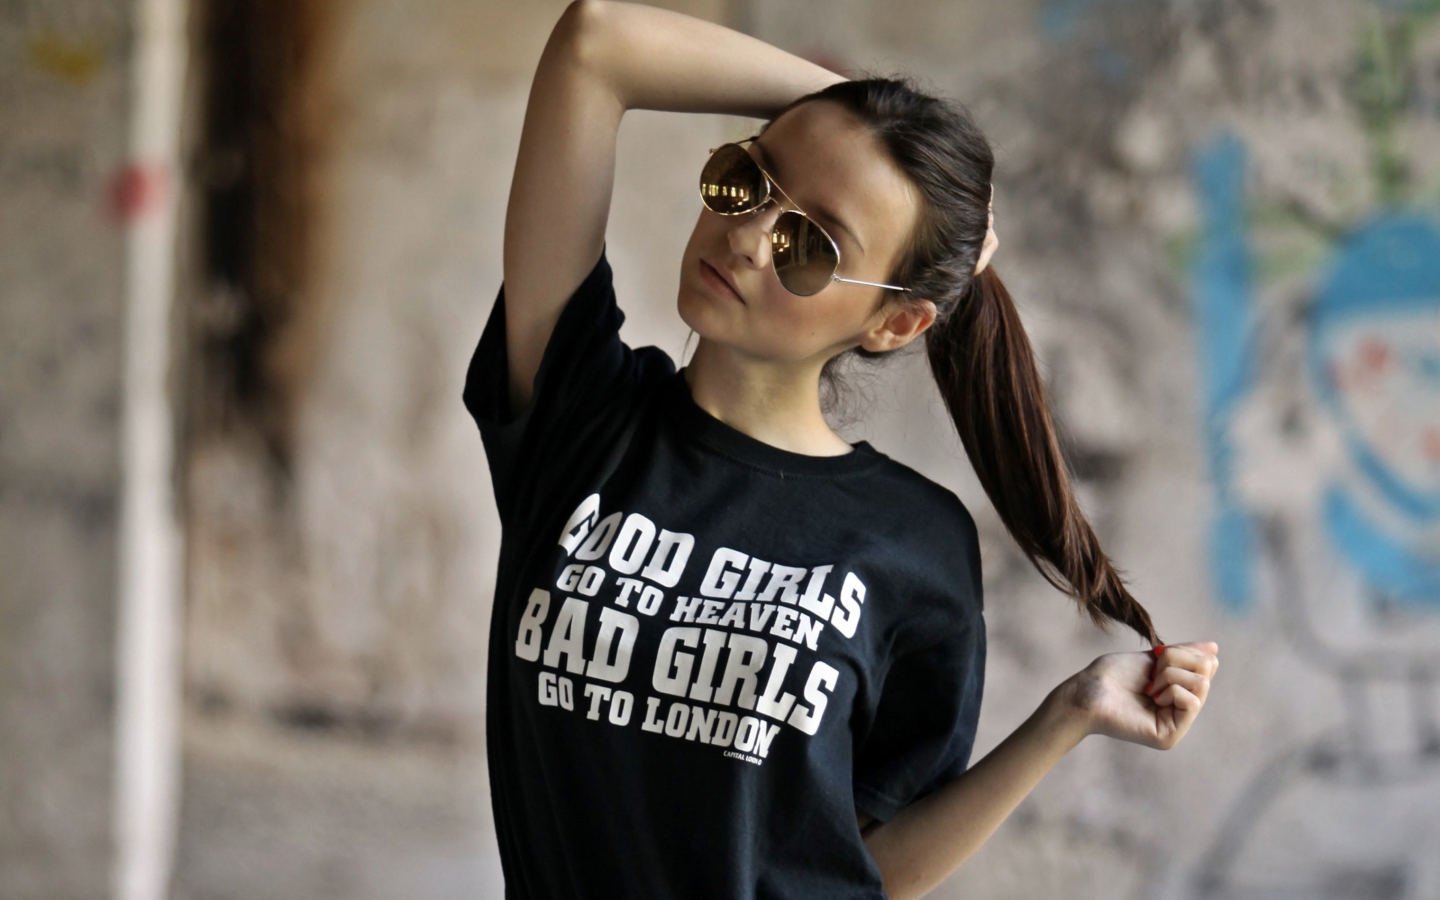 Bad Girls Go To London wallpaper 1440x900